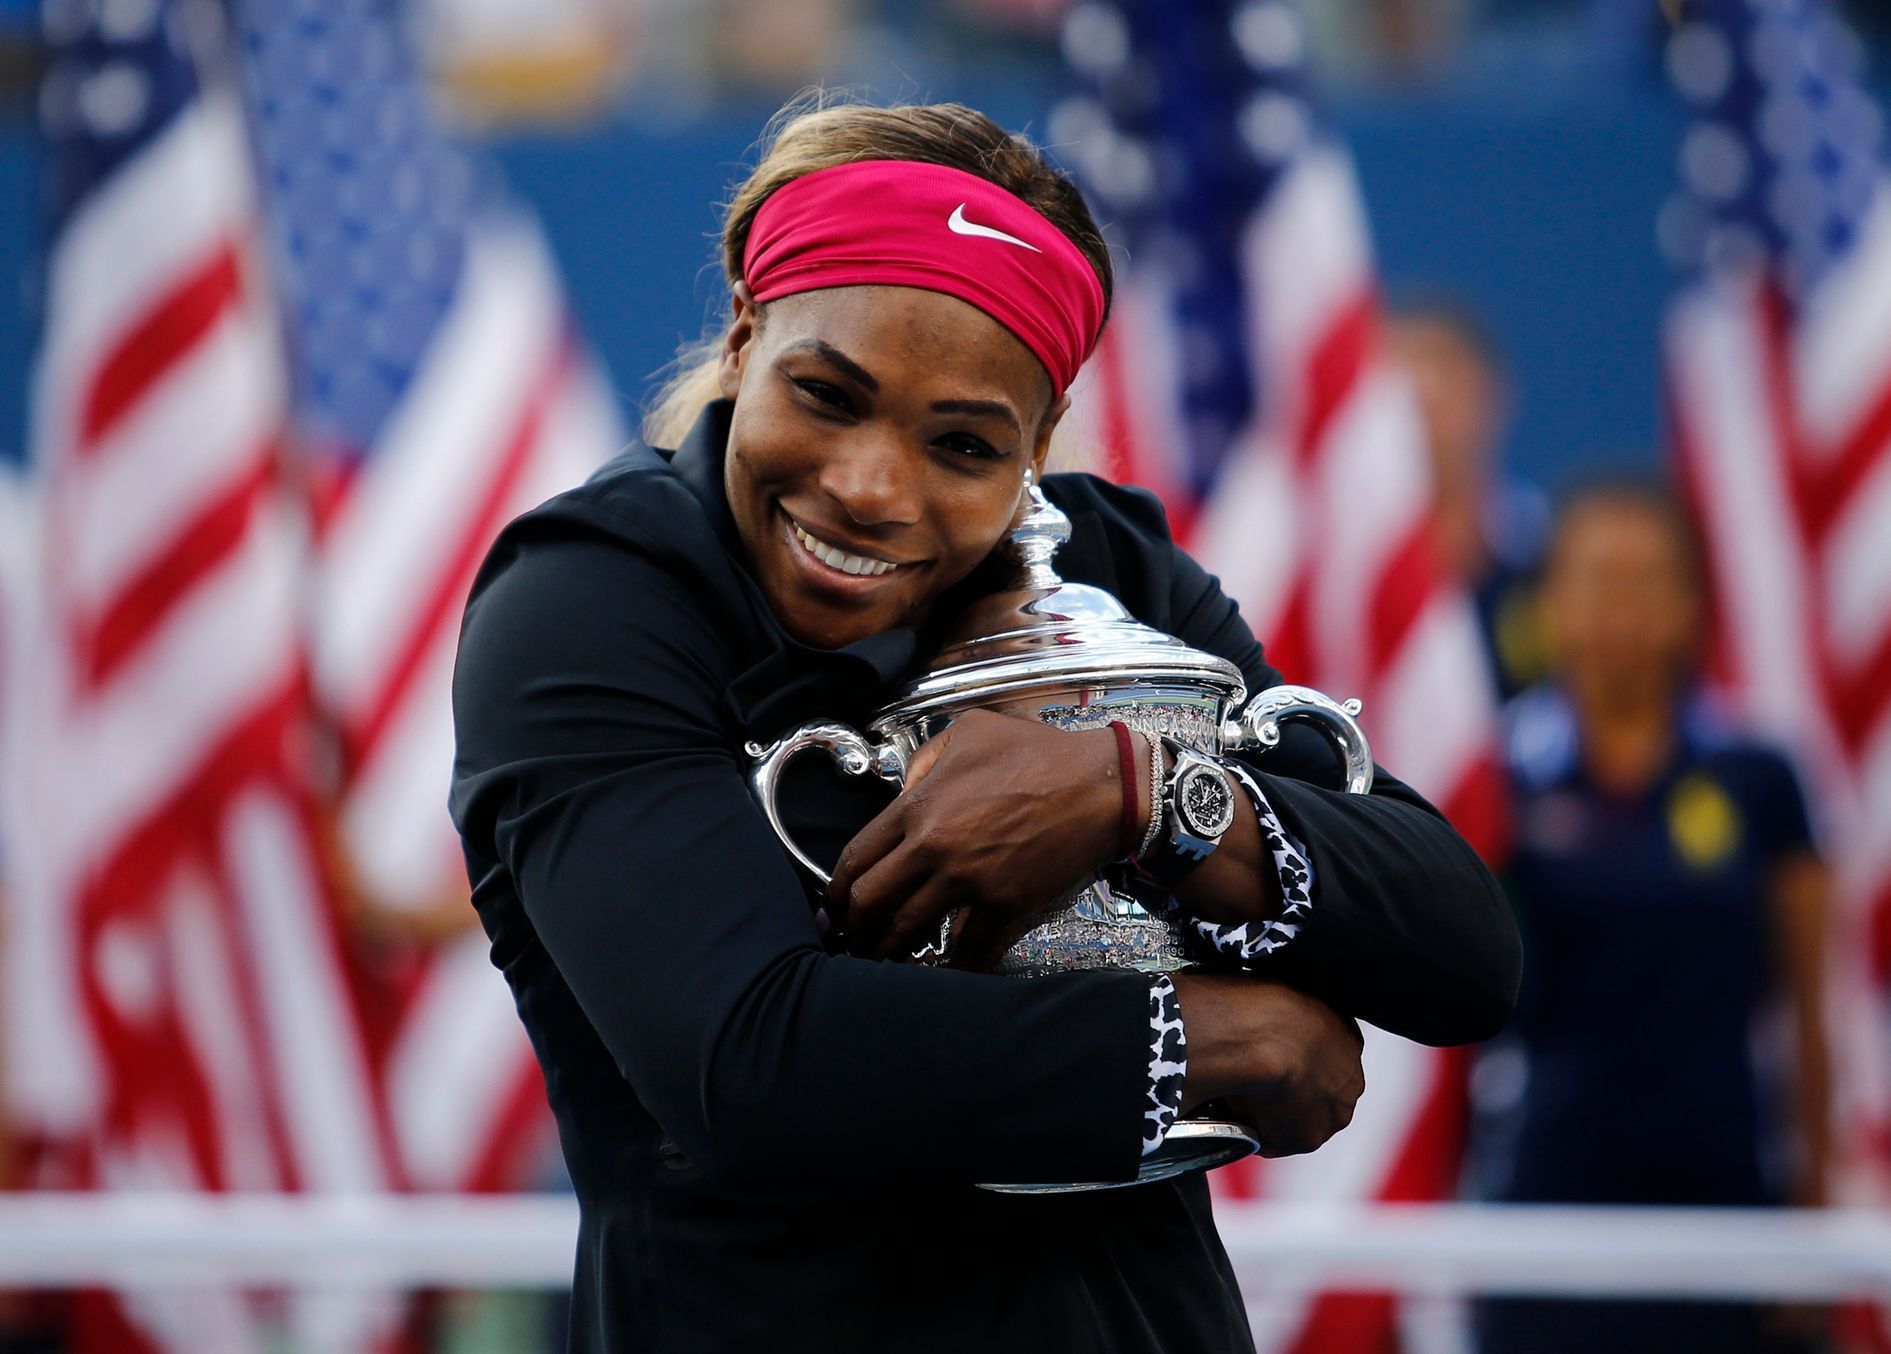 Nejlepší fotky roku 2014: Serena Williamsová